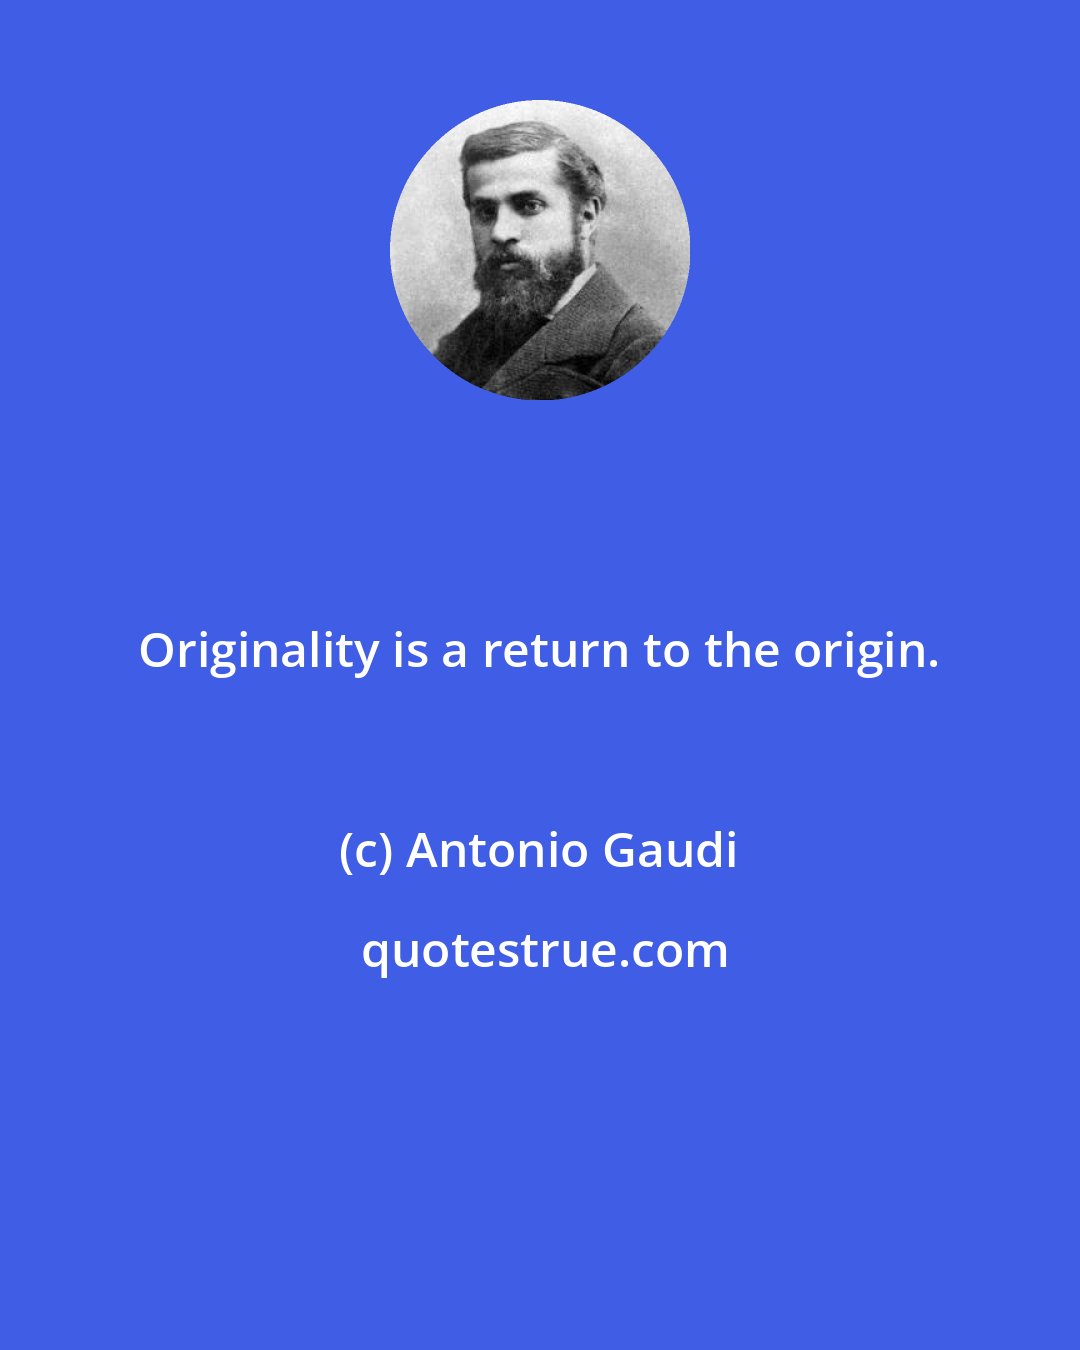 Antonio Gaudi: Originality is a return to the origin.